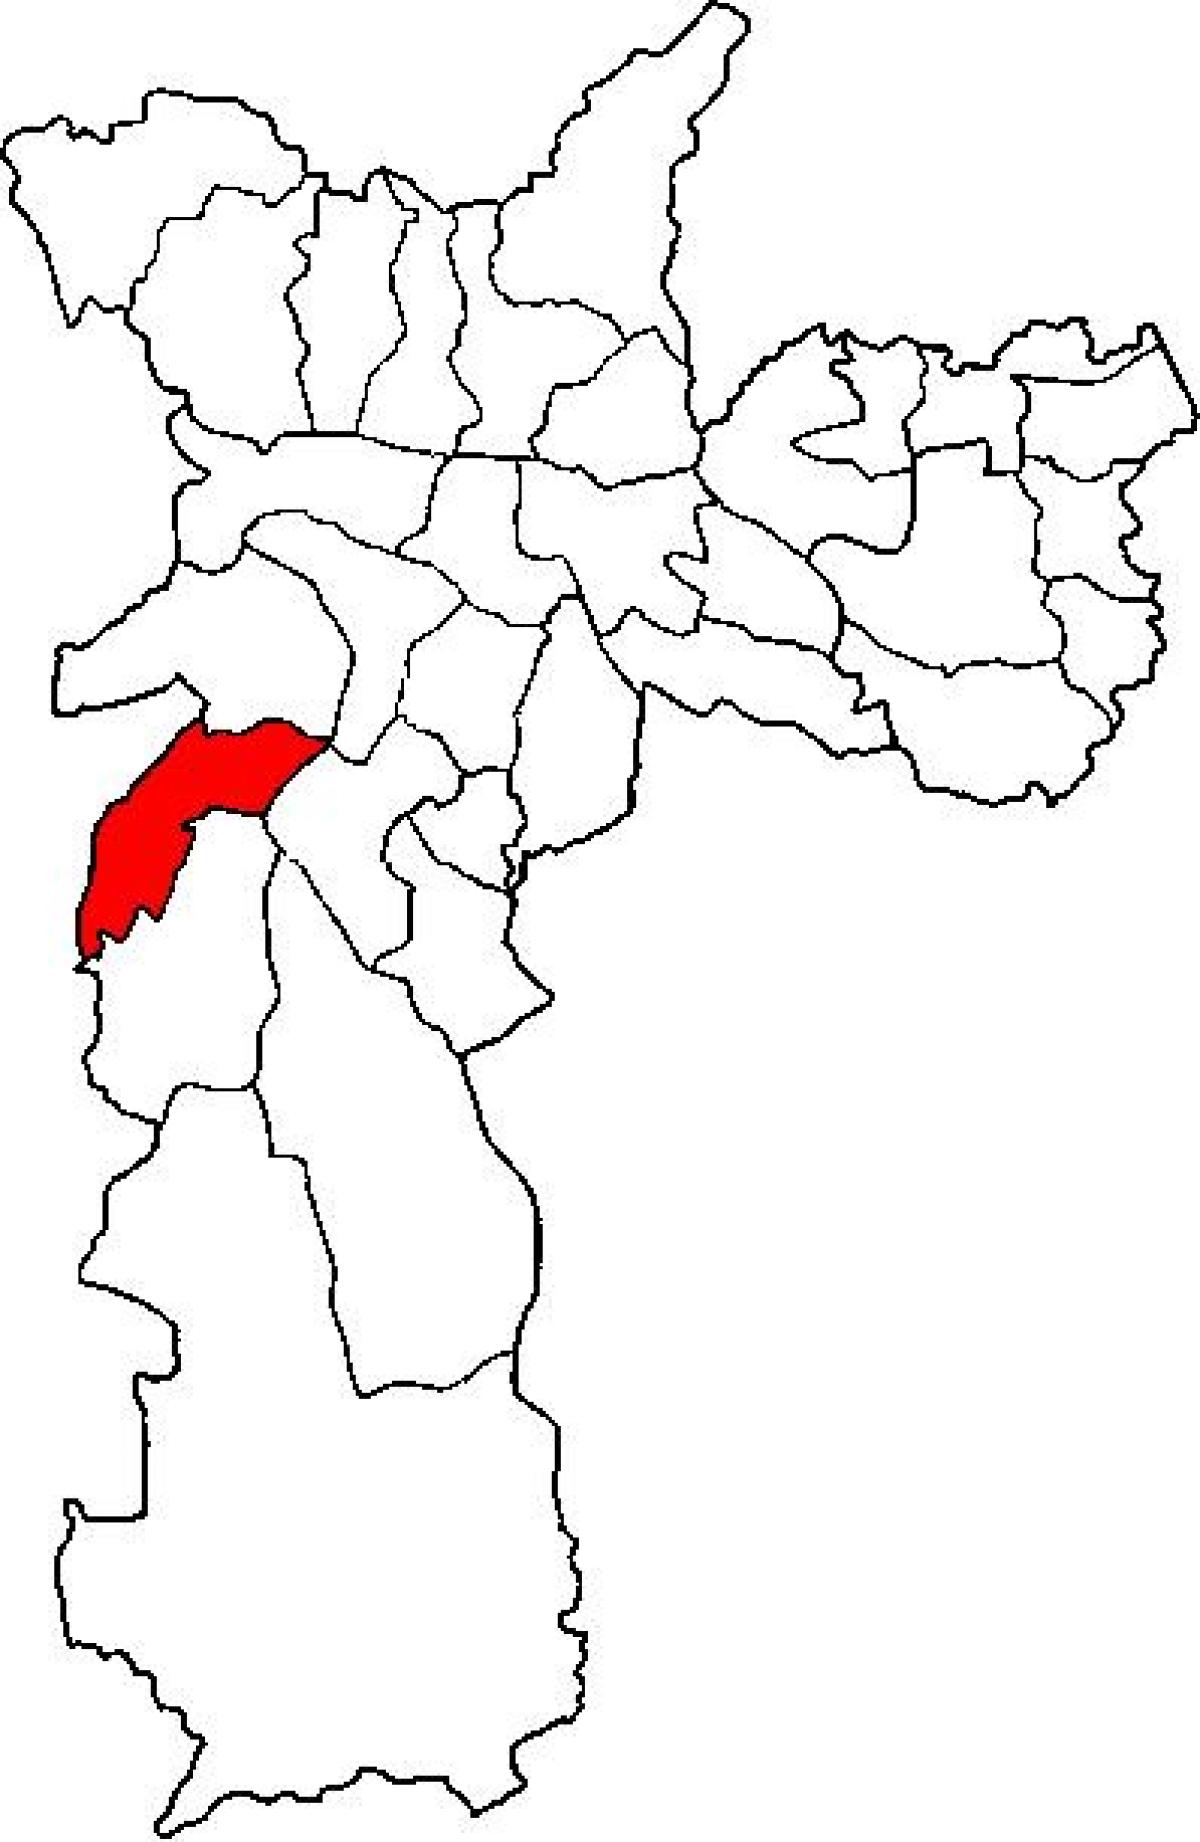 Kaart van Campo Limpo sub-prefectuur São Paulo